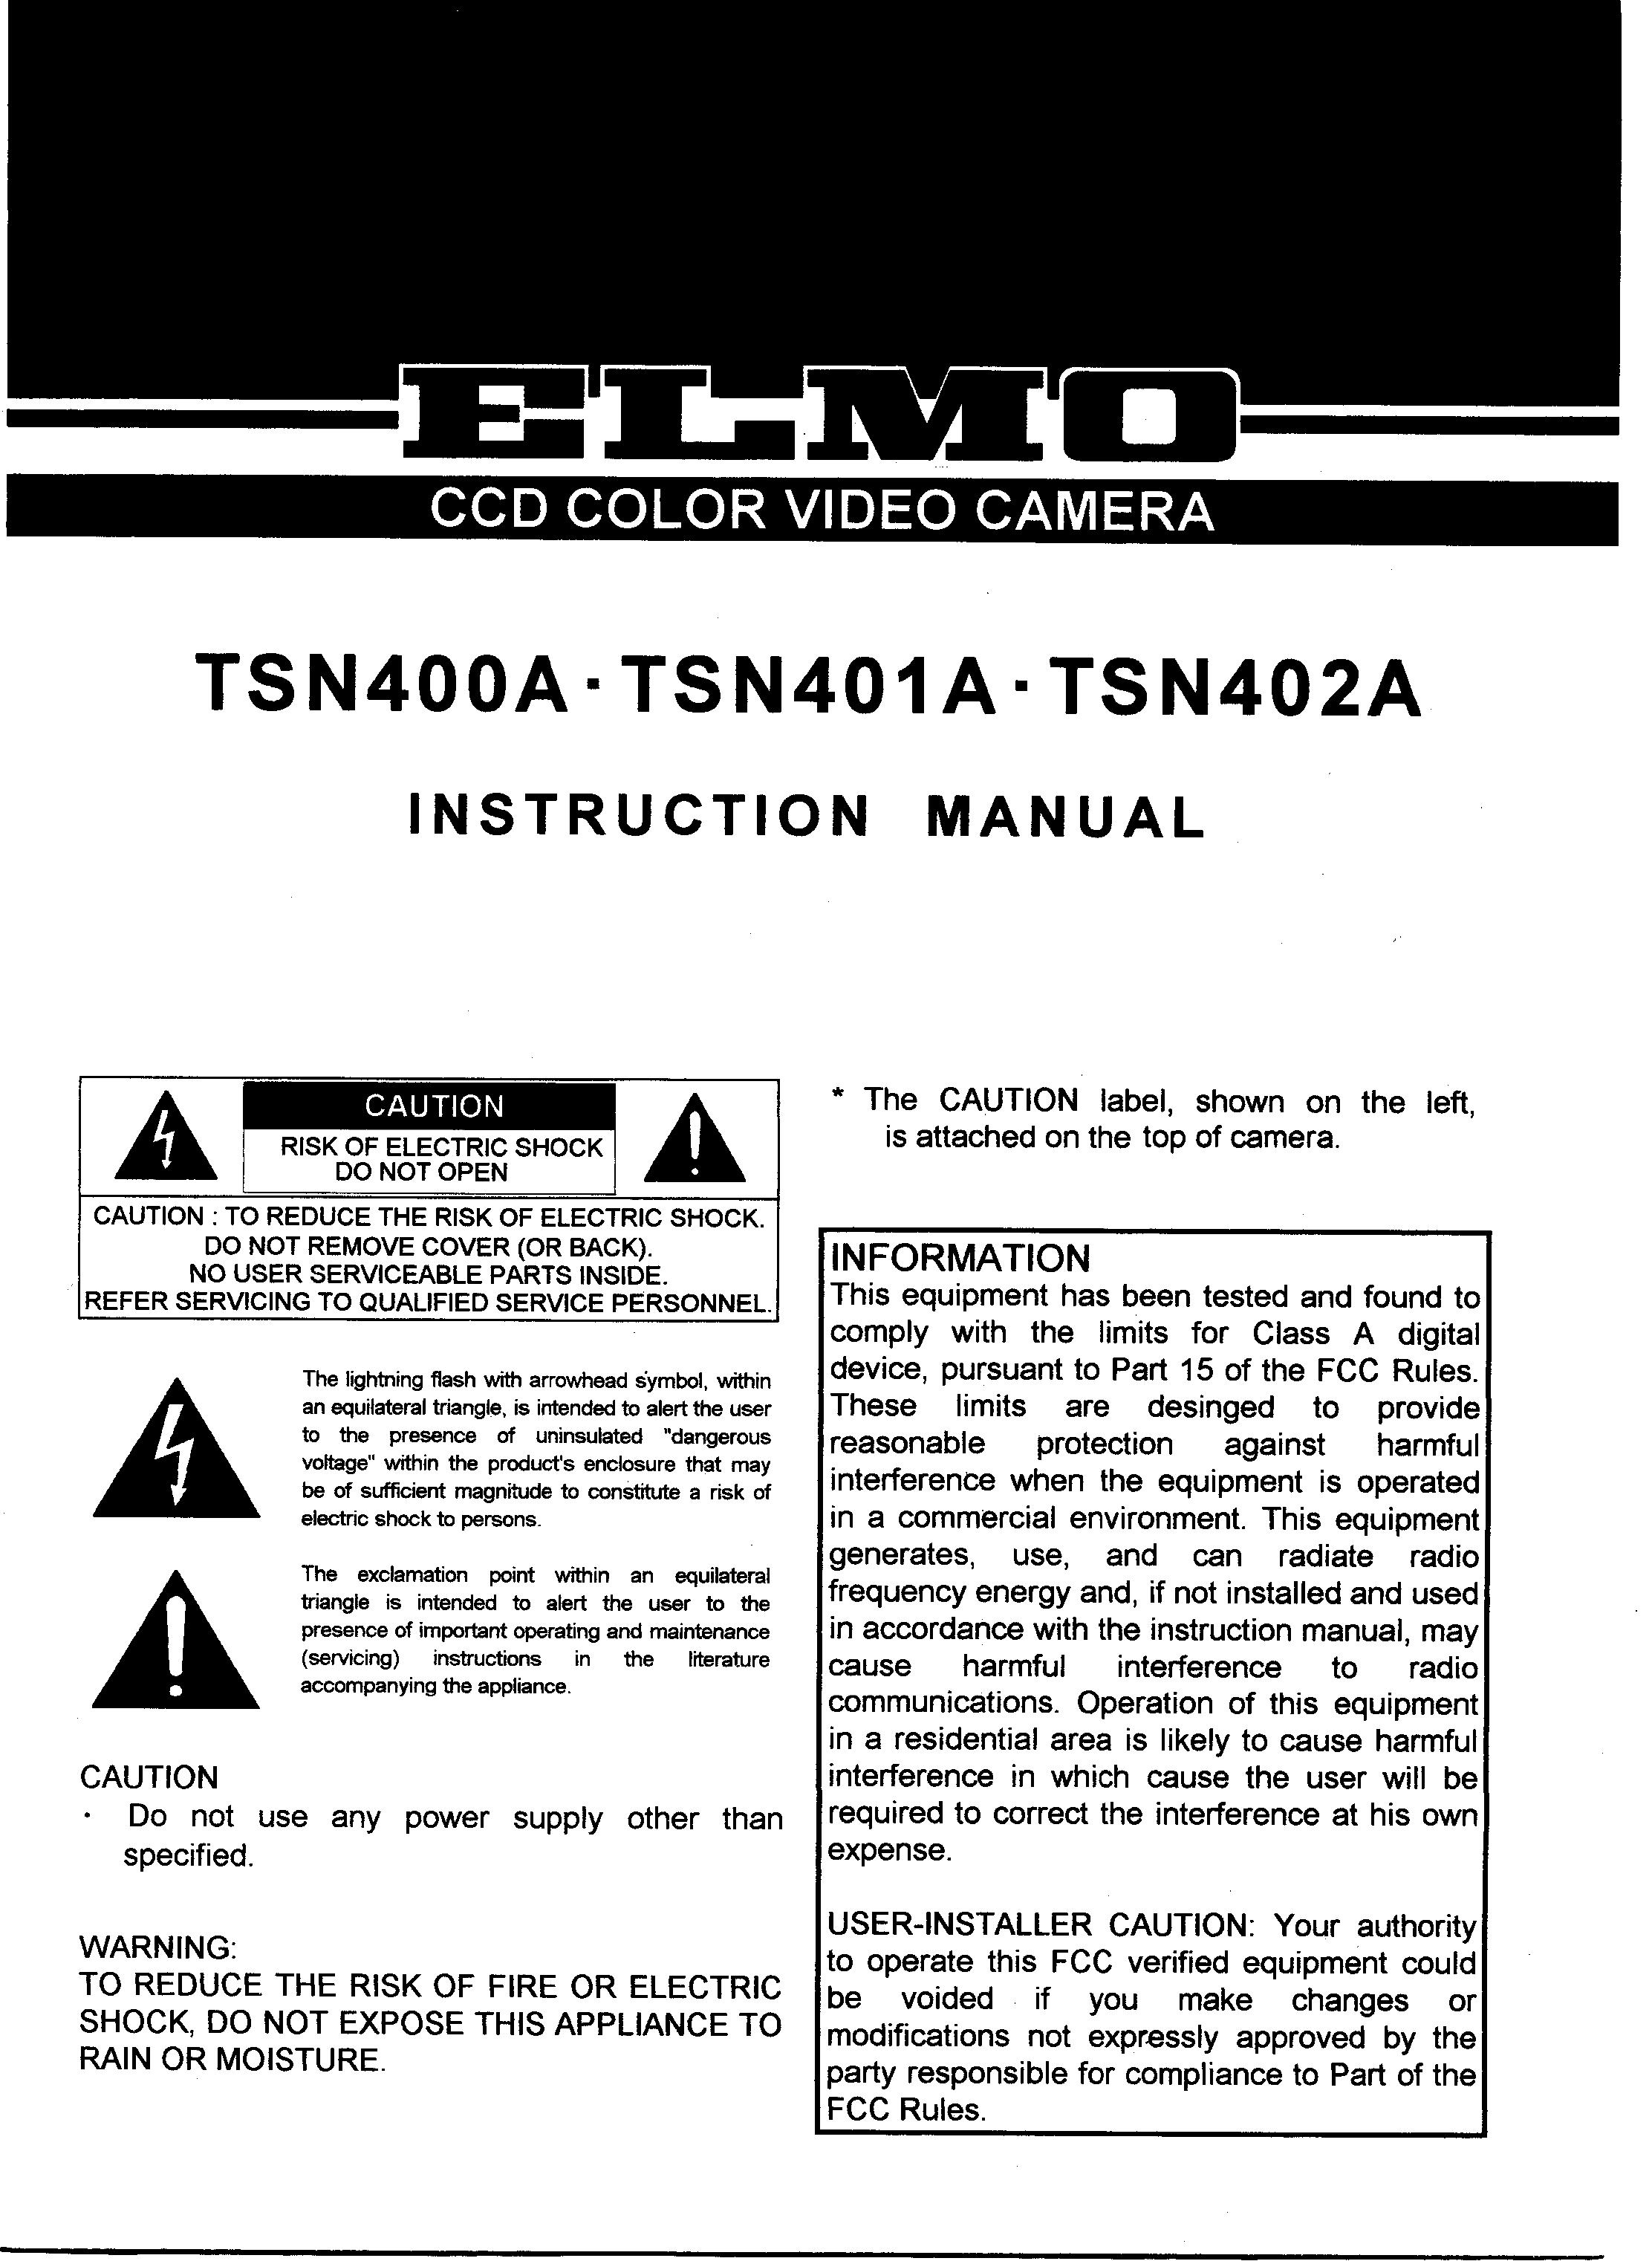 Elmo TSN400A Digital Camera User Manual